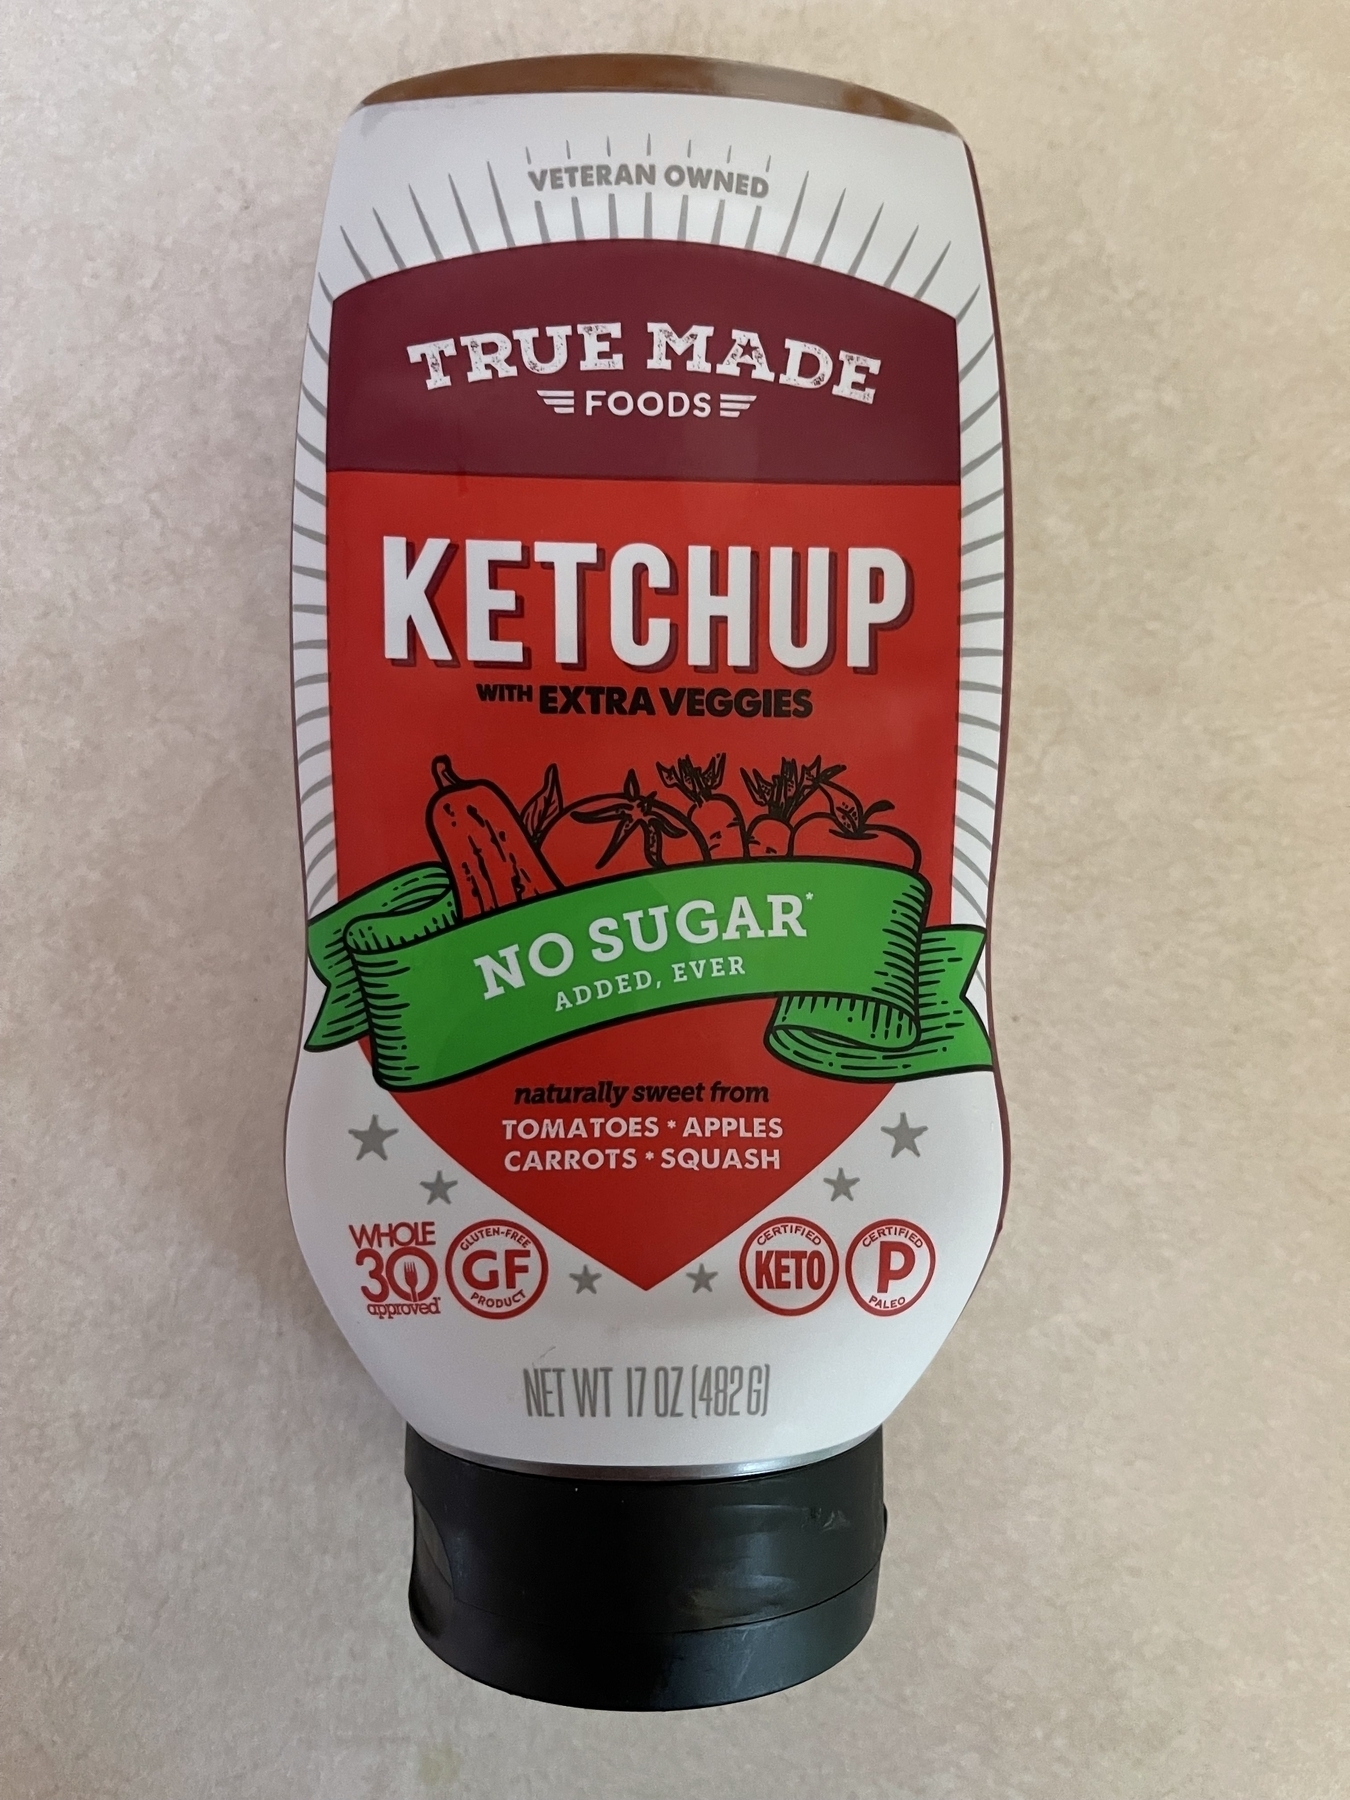 True Made Foods ketchup bottle